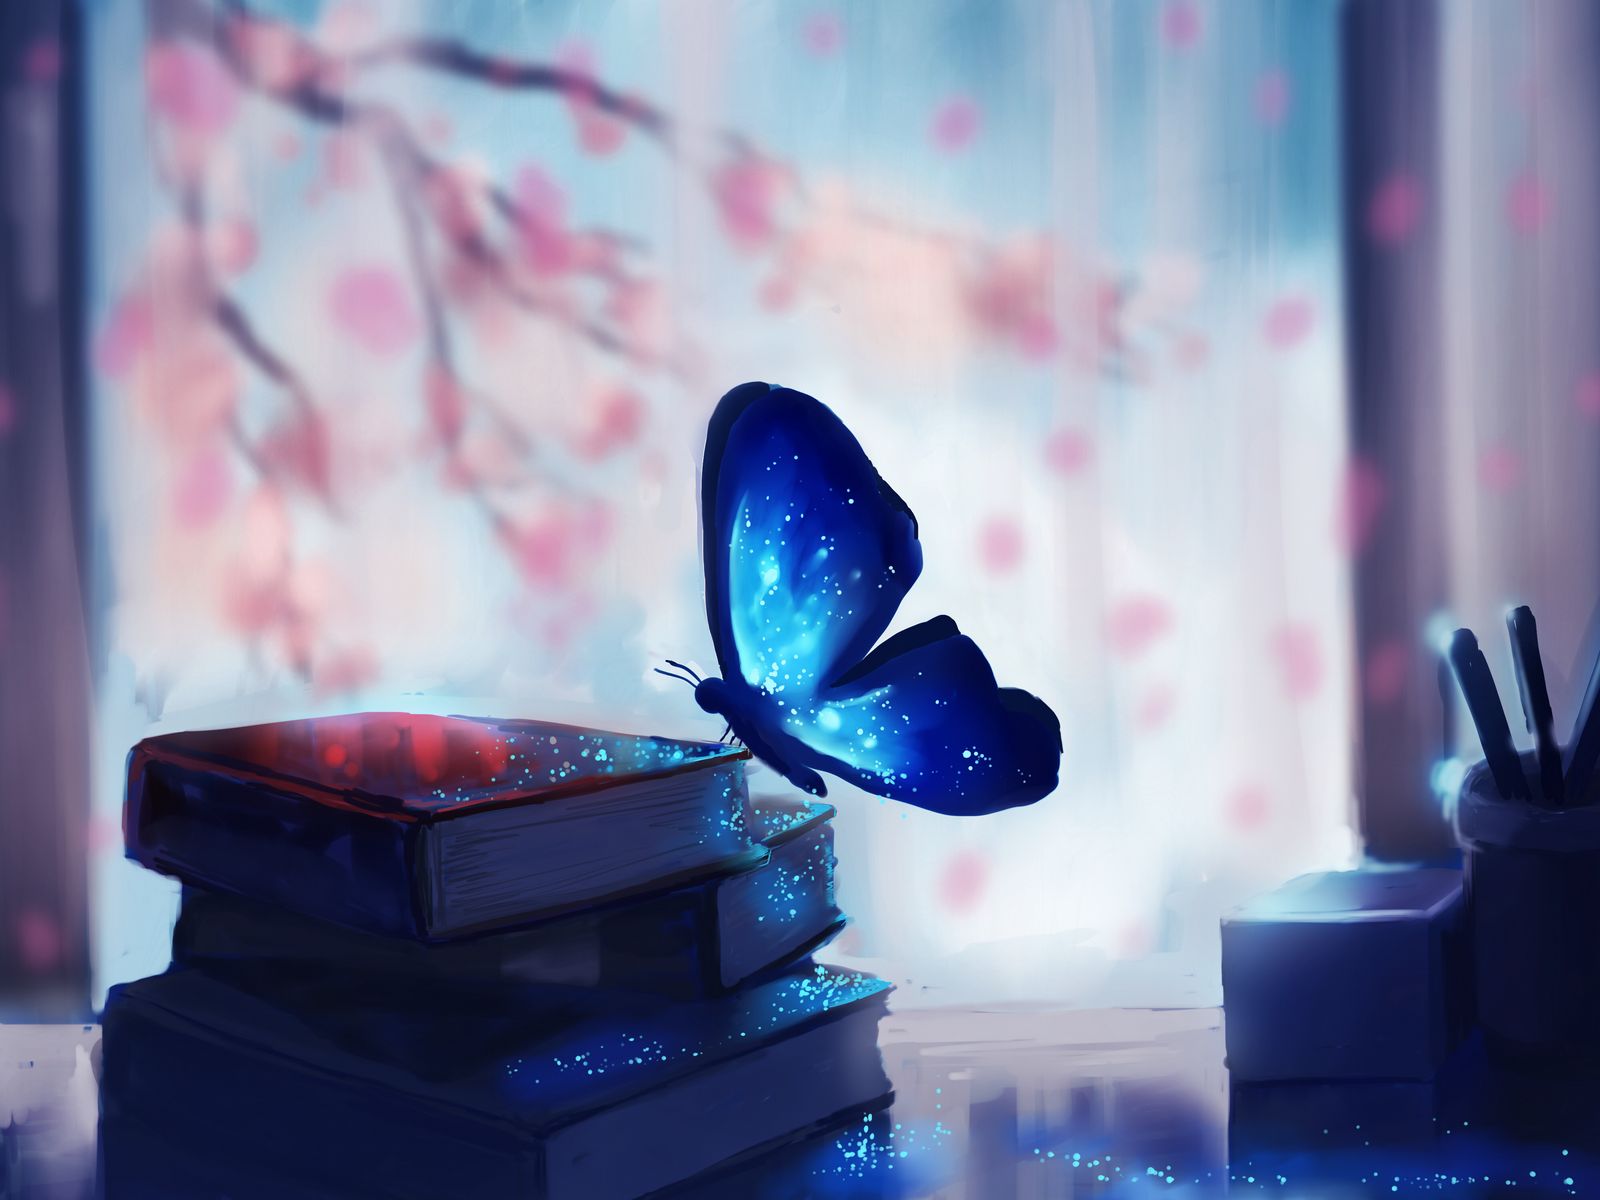 Синяя бабочка арт